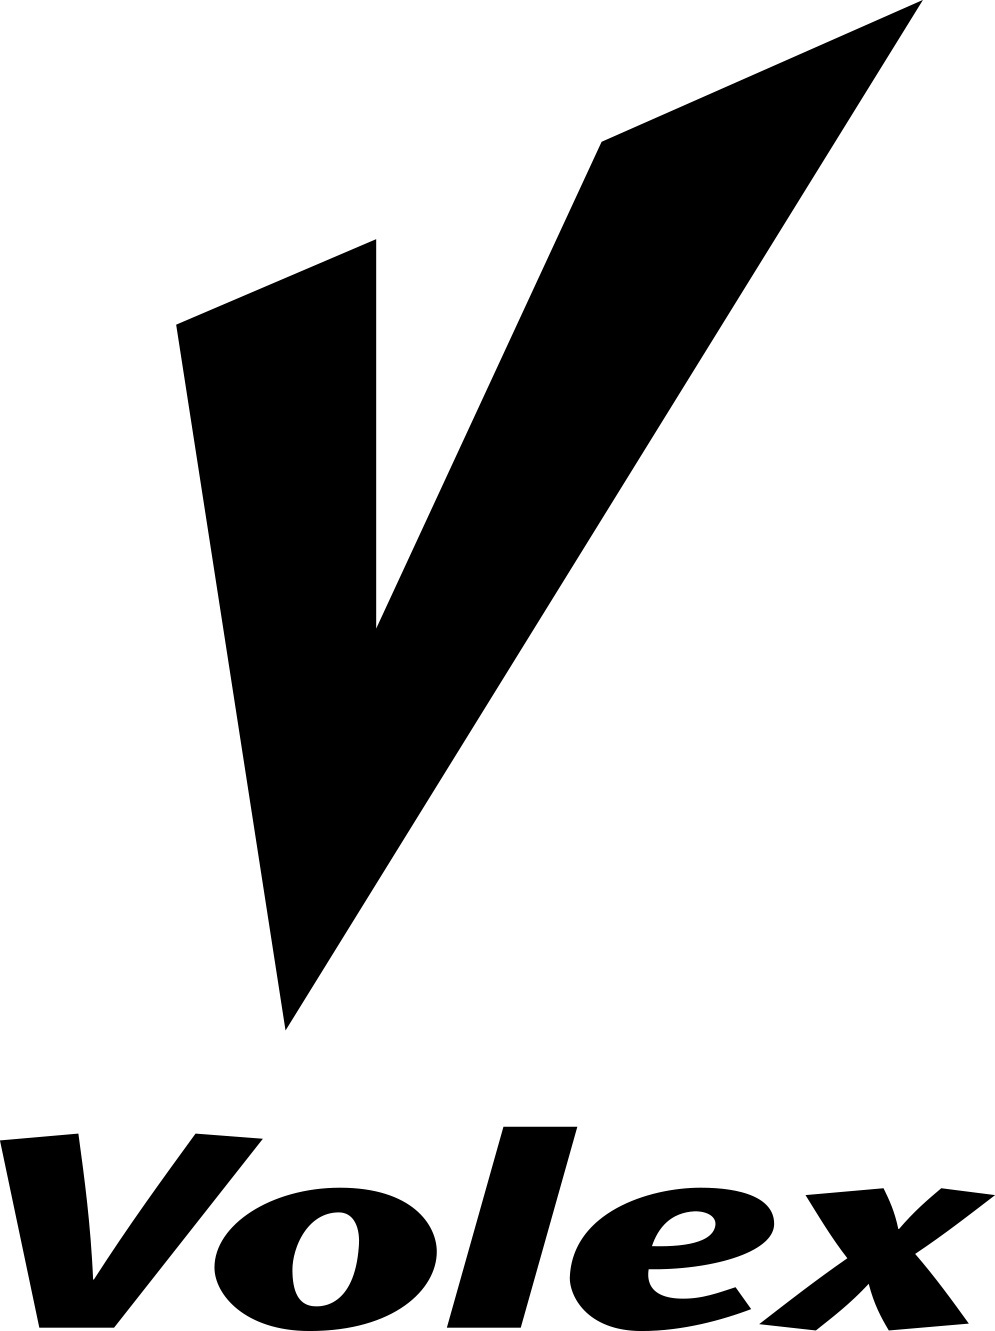 Volex becomes a regular member of CharIN